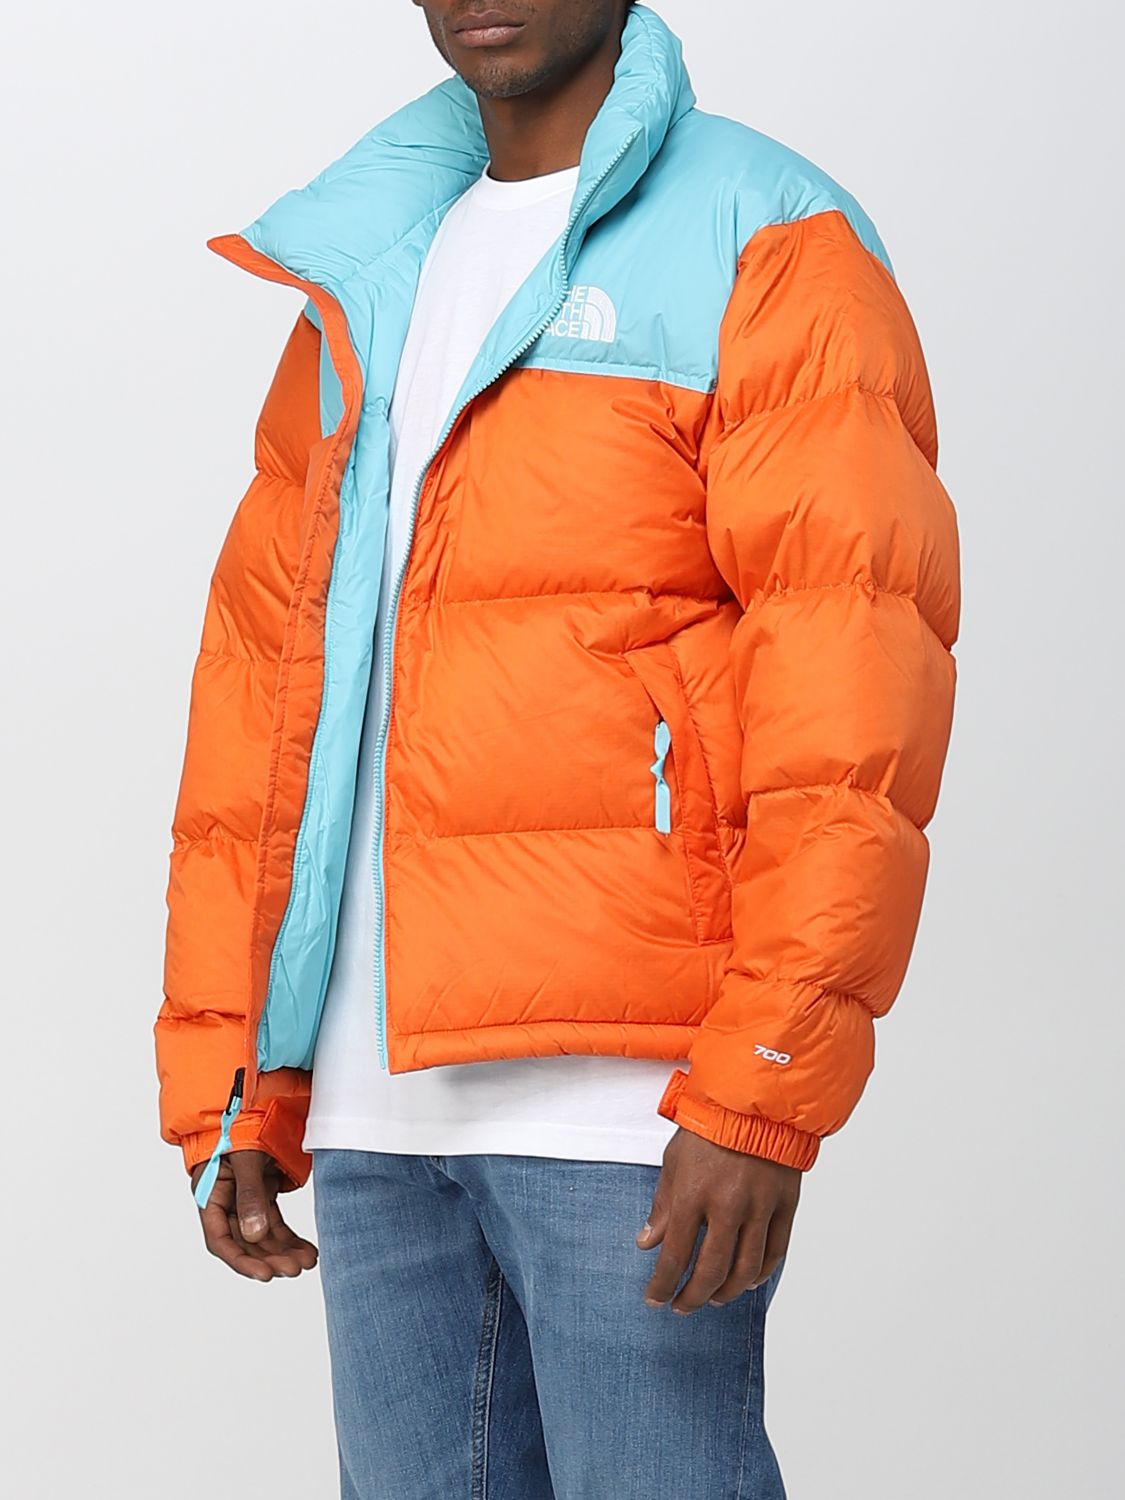 frecuencia al límite expedido THE NORTH FACE: jacket for man - Orange | The North Face jacket NF0A3C8D  online on GIGLIO.COM